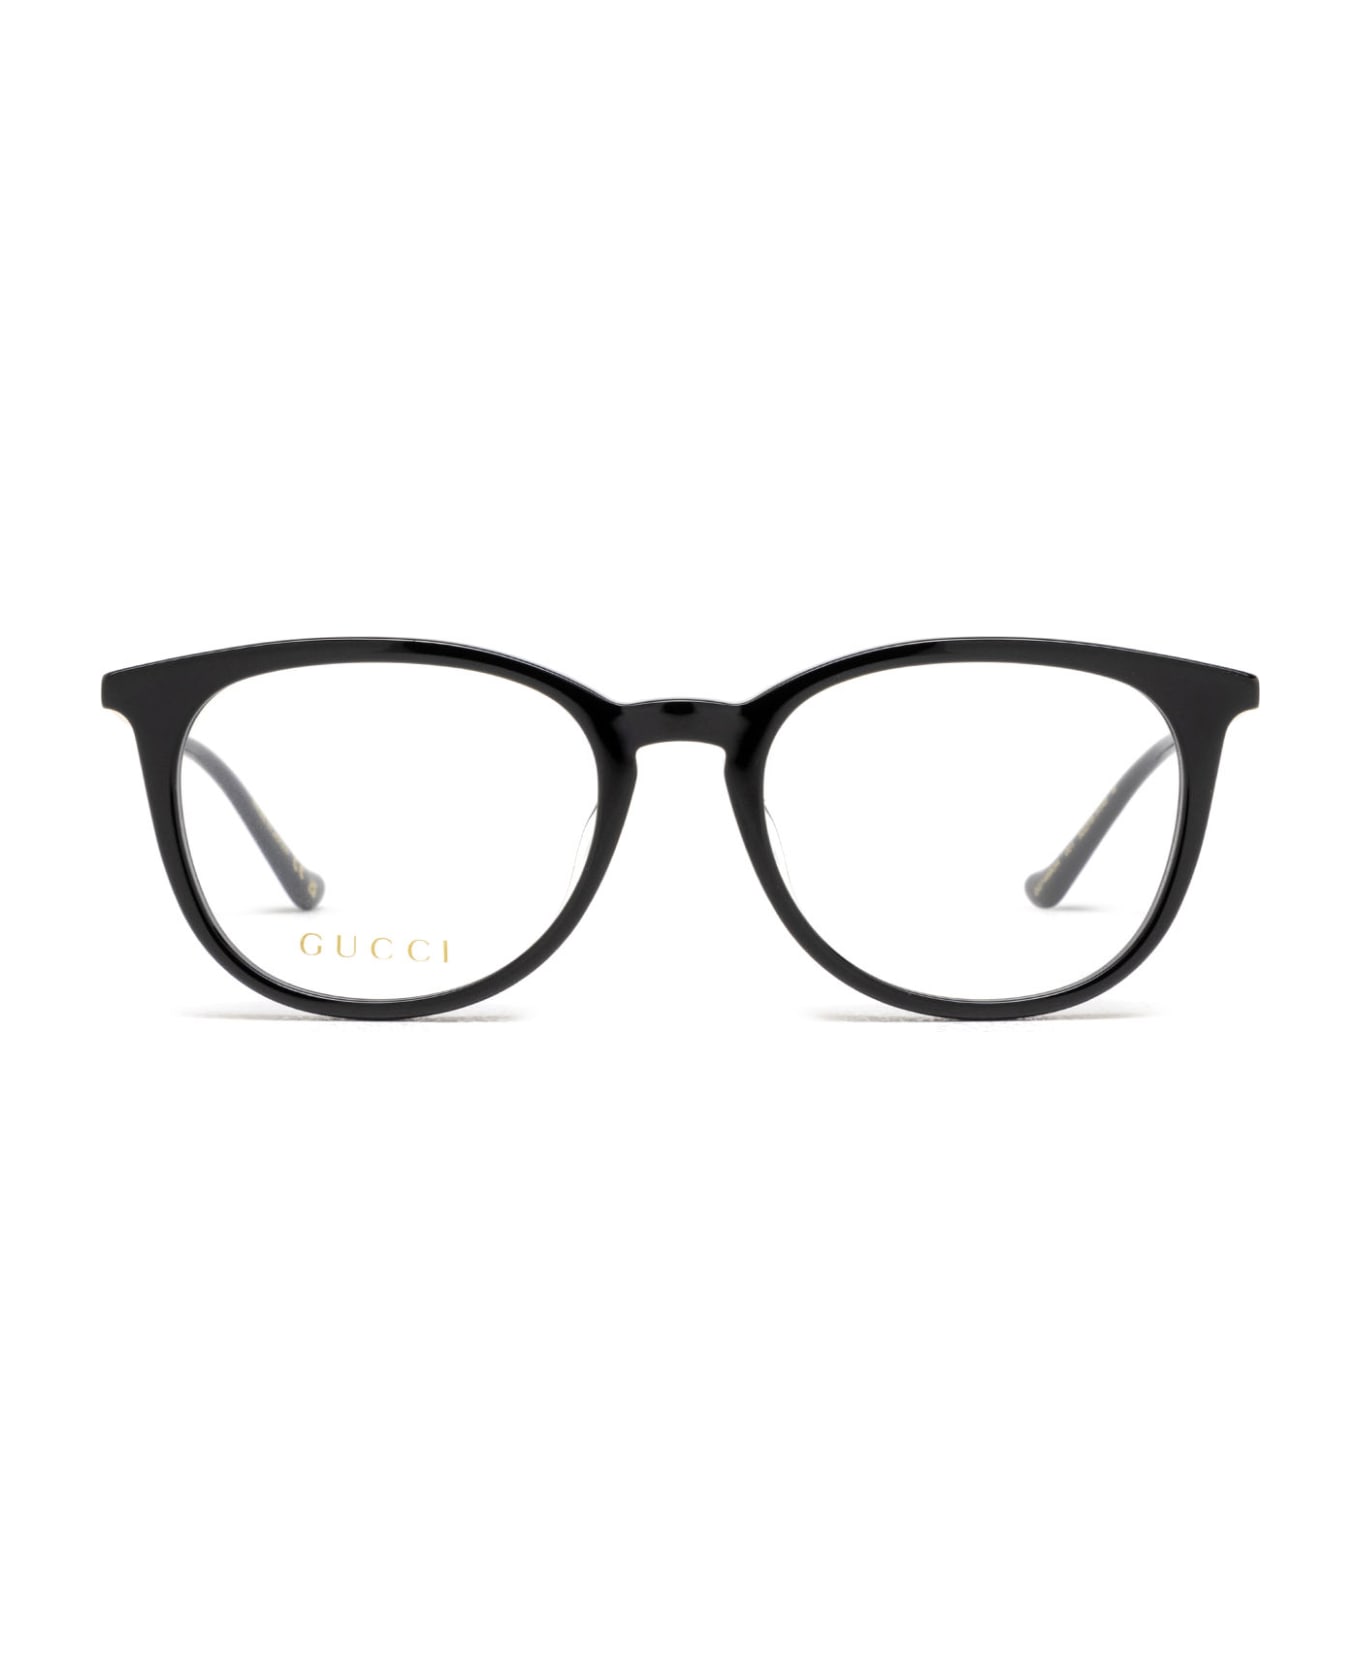 Gucci Eyewear Gg1468oa Black Glasses - Black